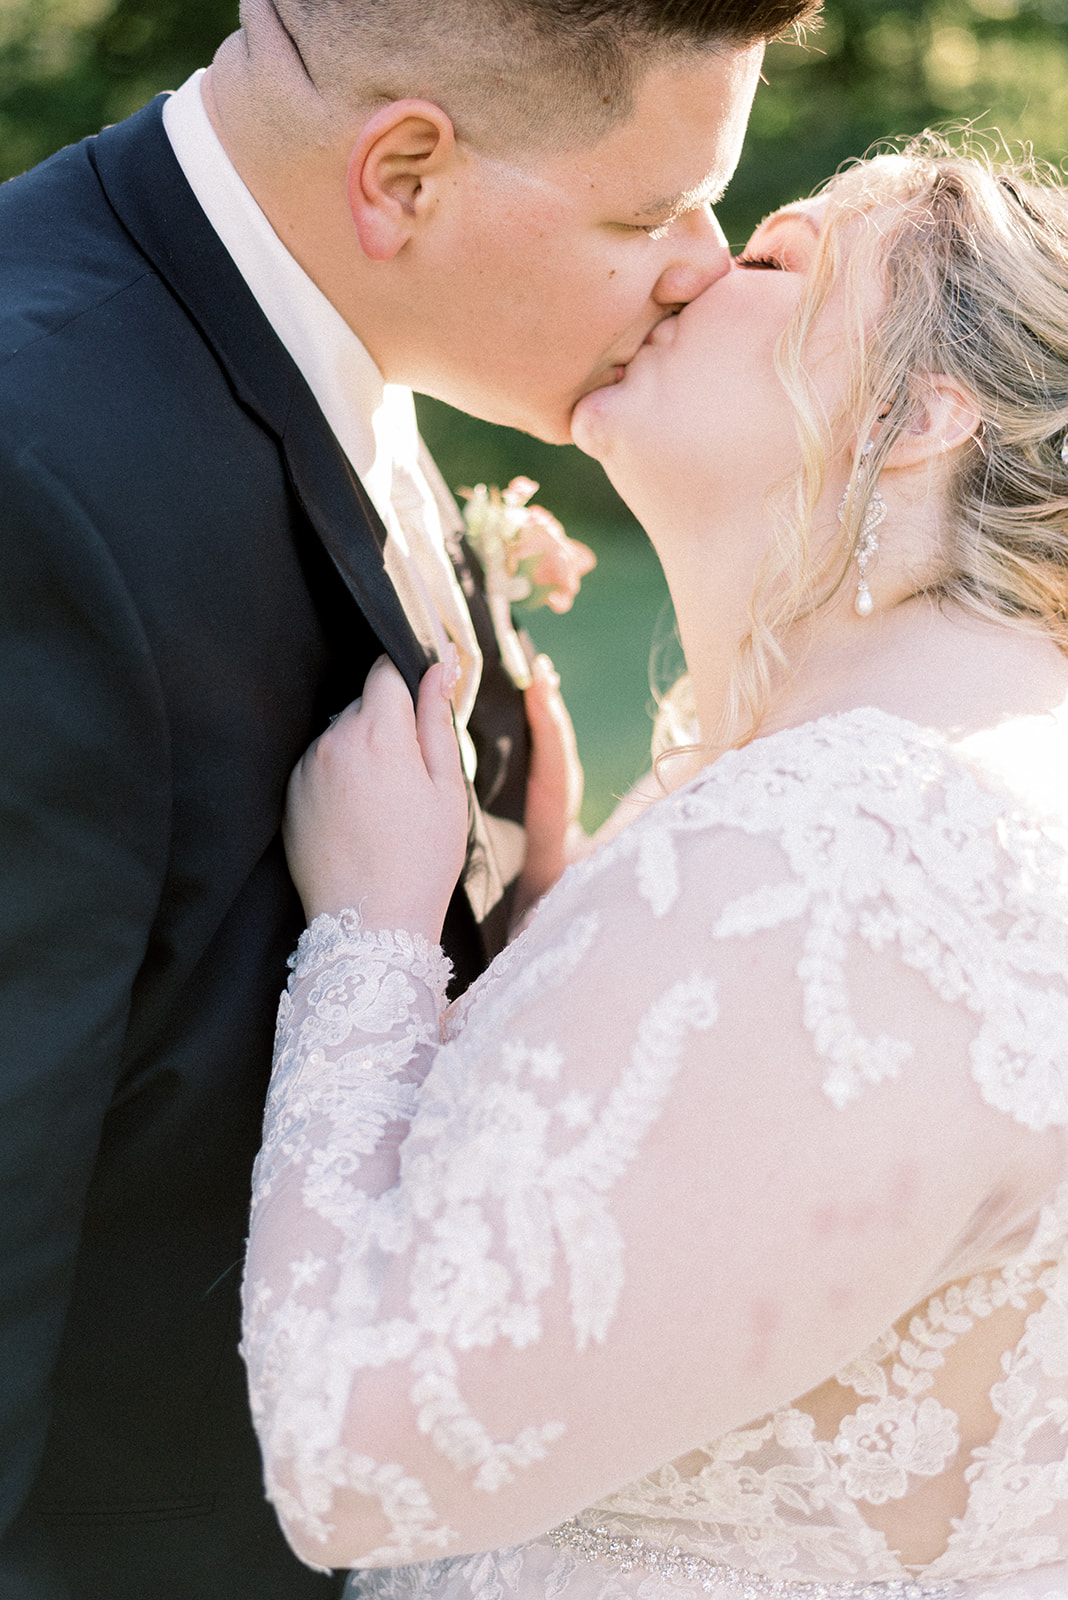 Pennsylvania wedding photographer captures bride holding groom's jacket kissing him